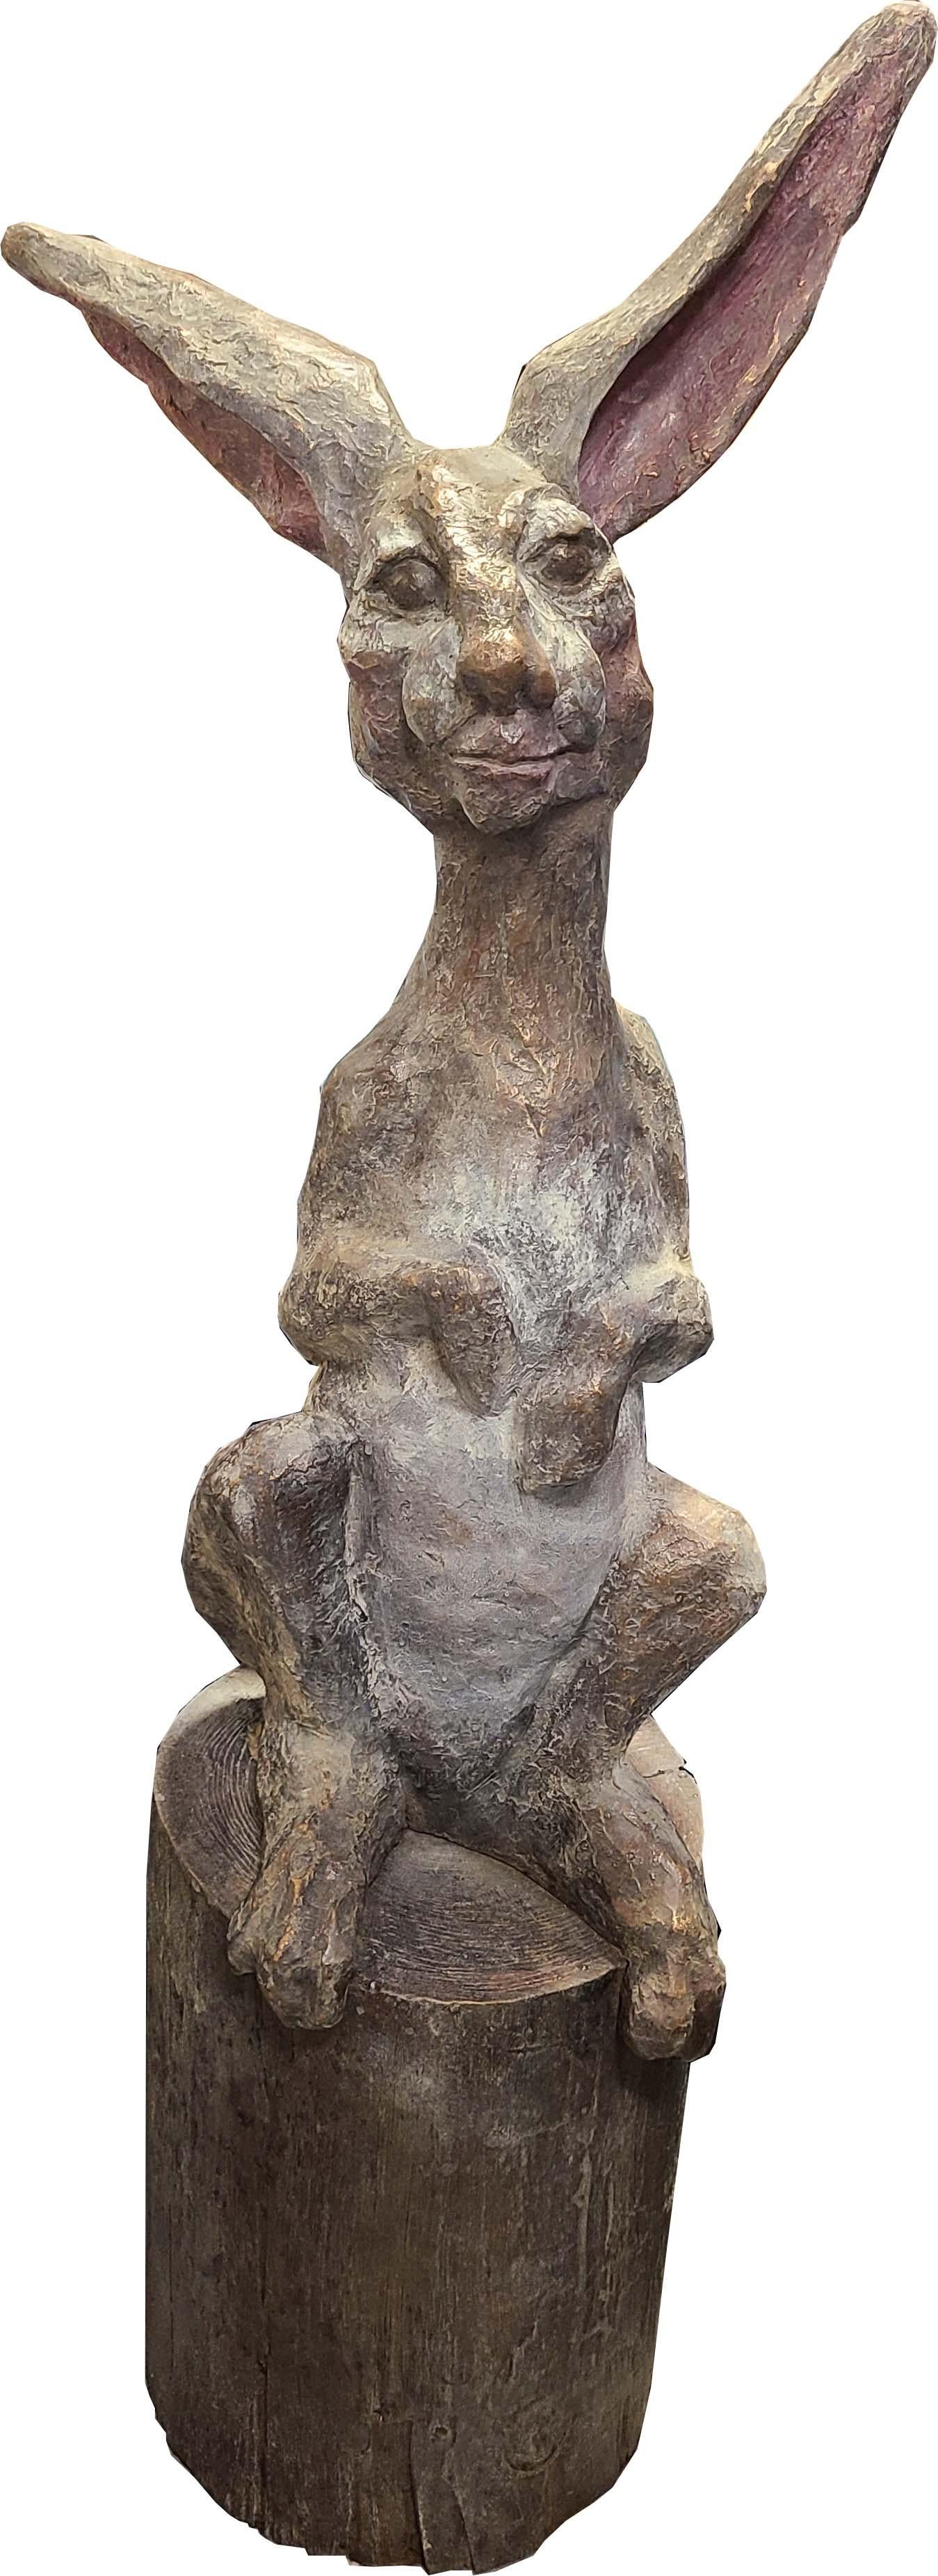 Giuseppe Palumbo Figurative Sculpture - Hare's to You 56/99